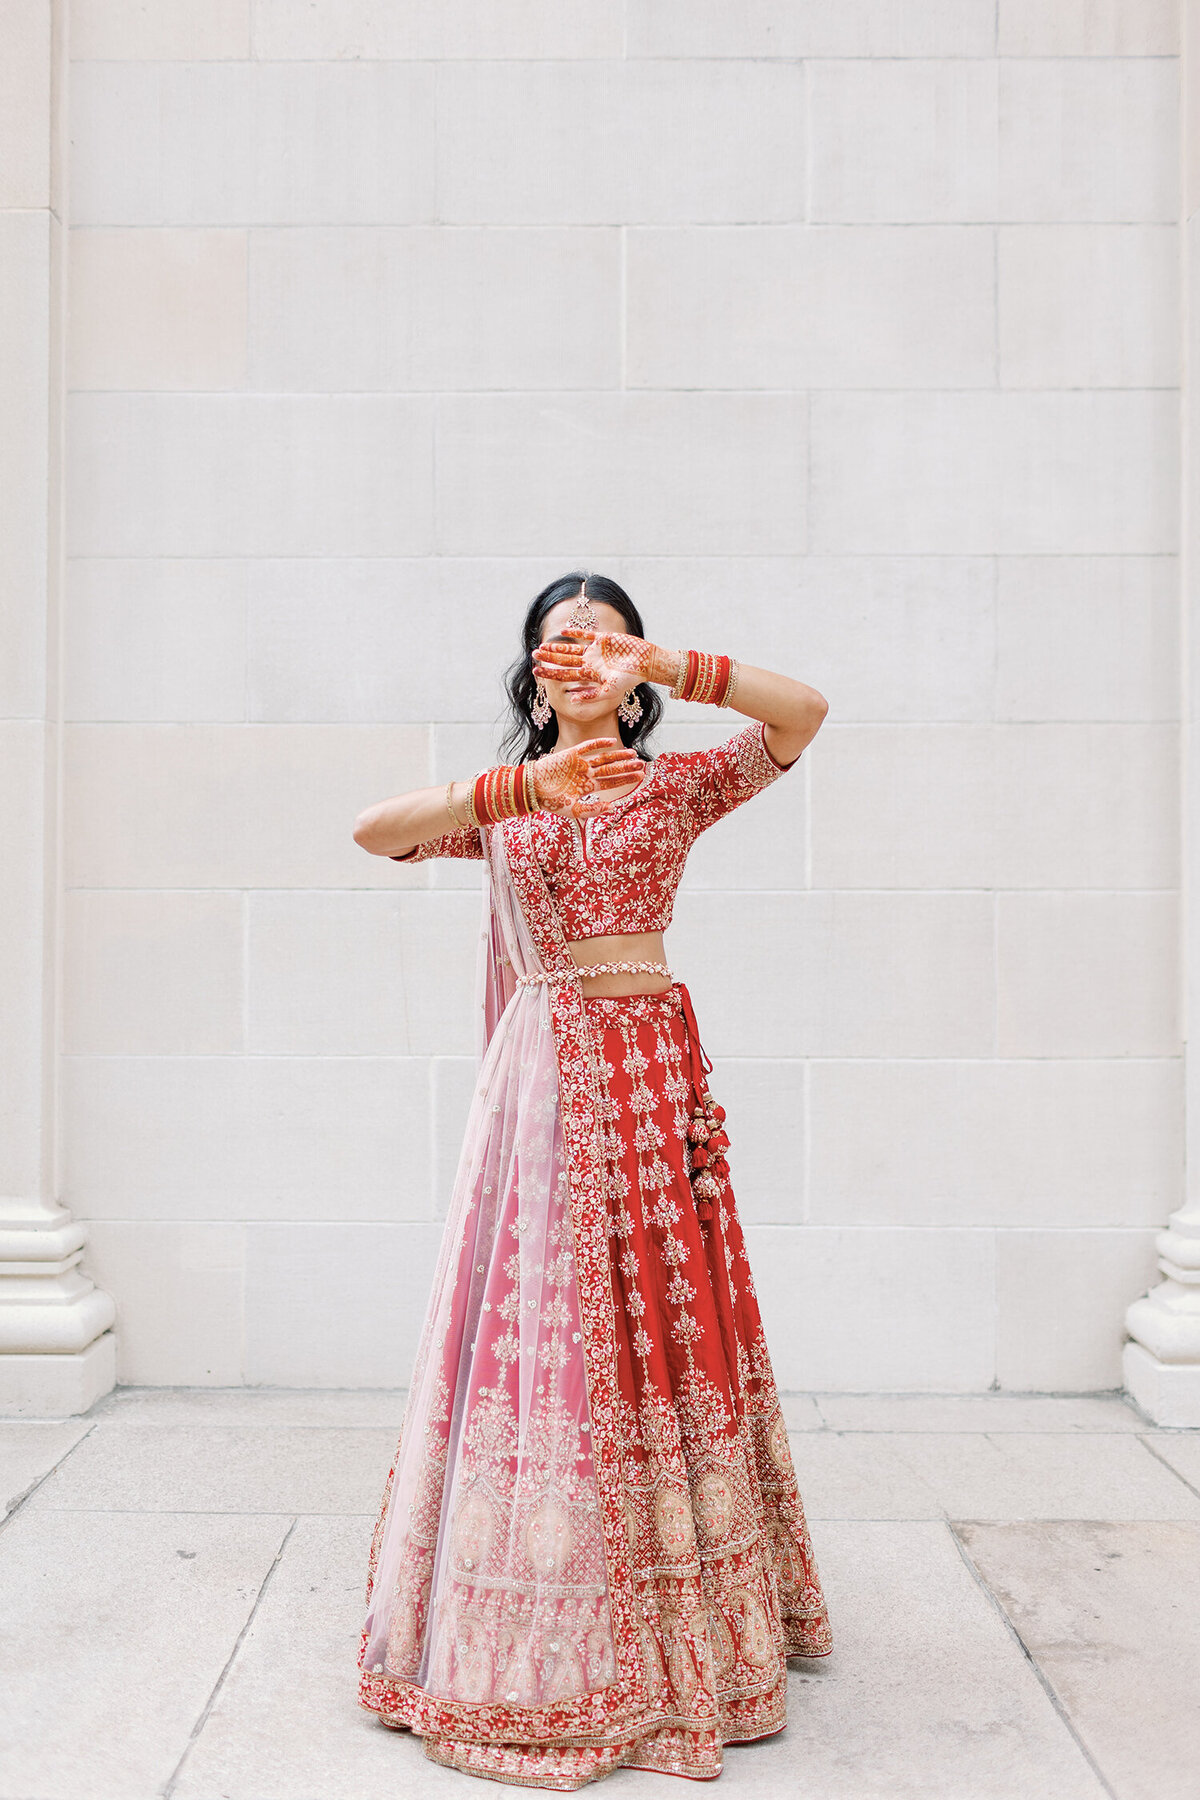 atlanta-indian-wedding-photographer-11